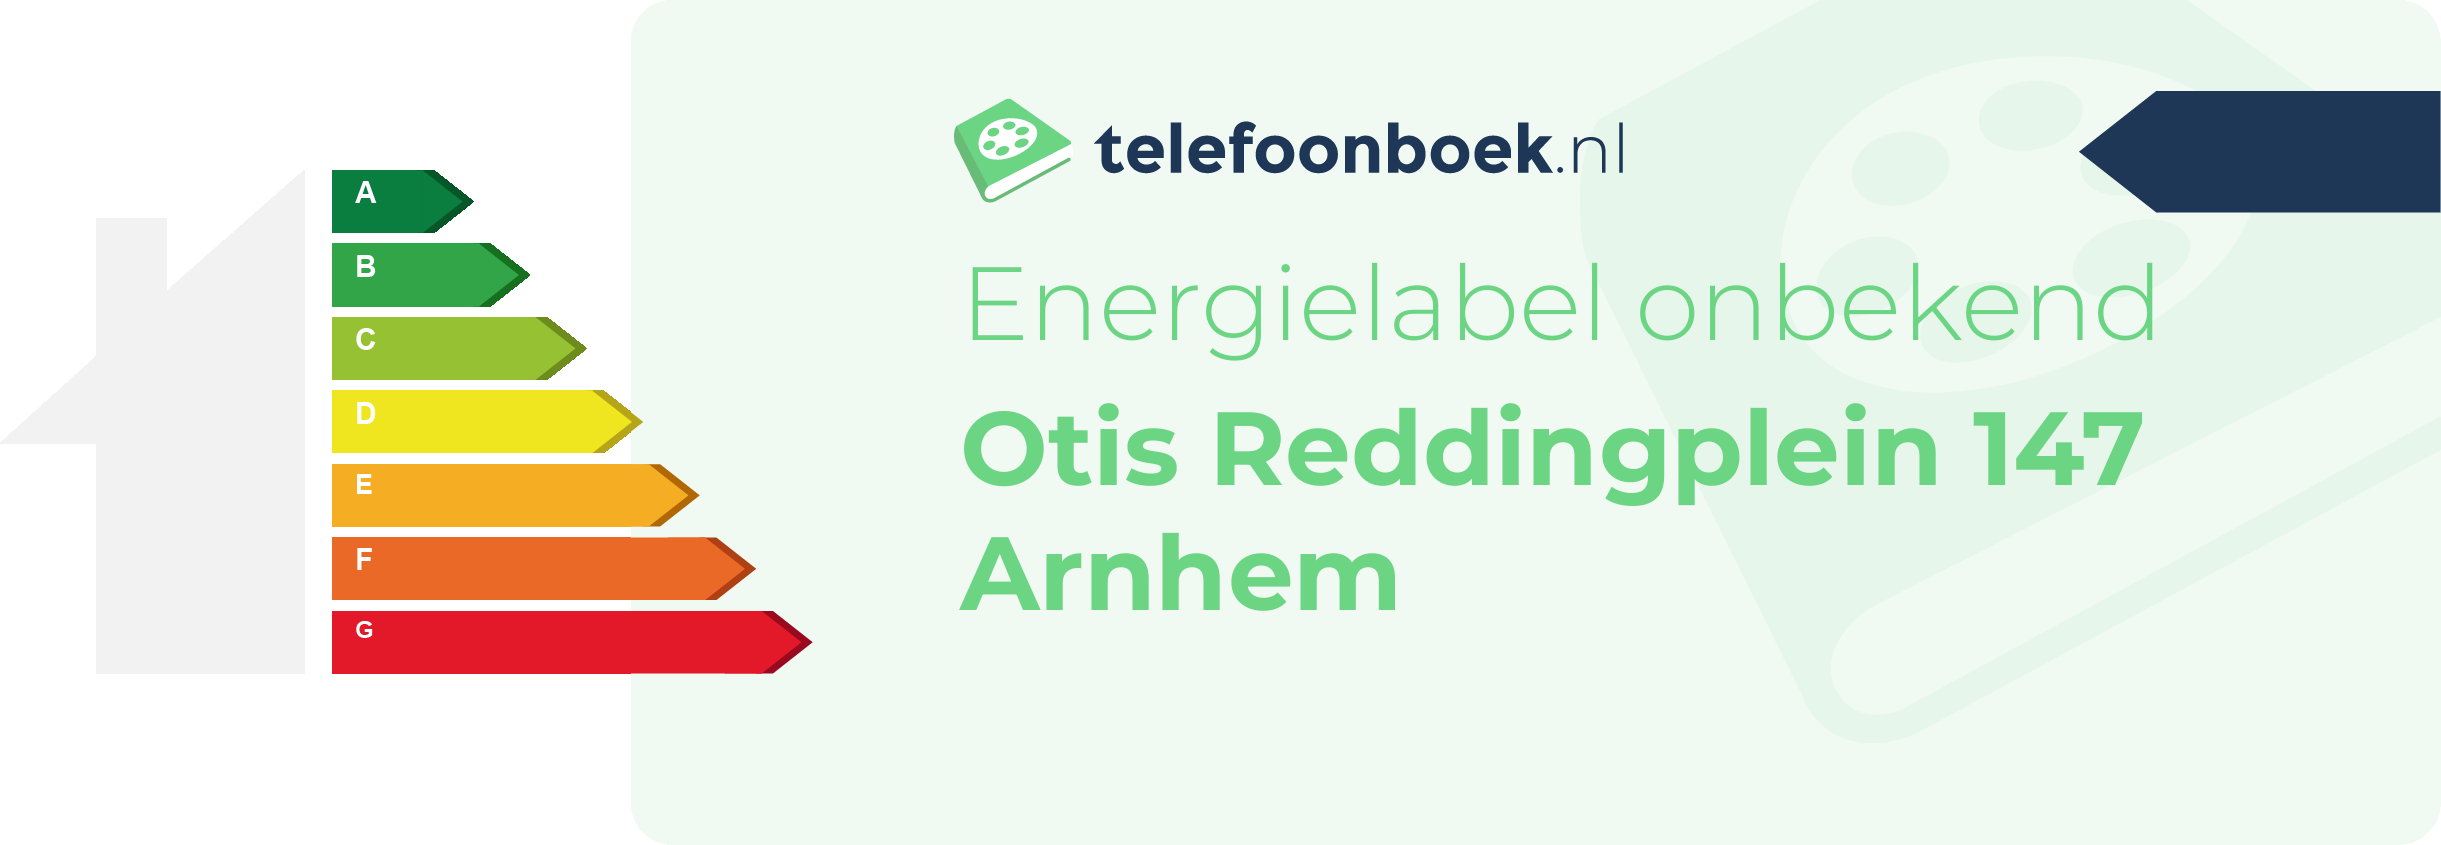 Energielabel Otis Reddingplein 147 Arnhem